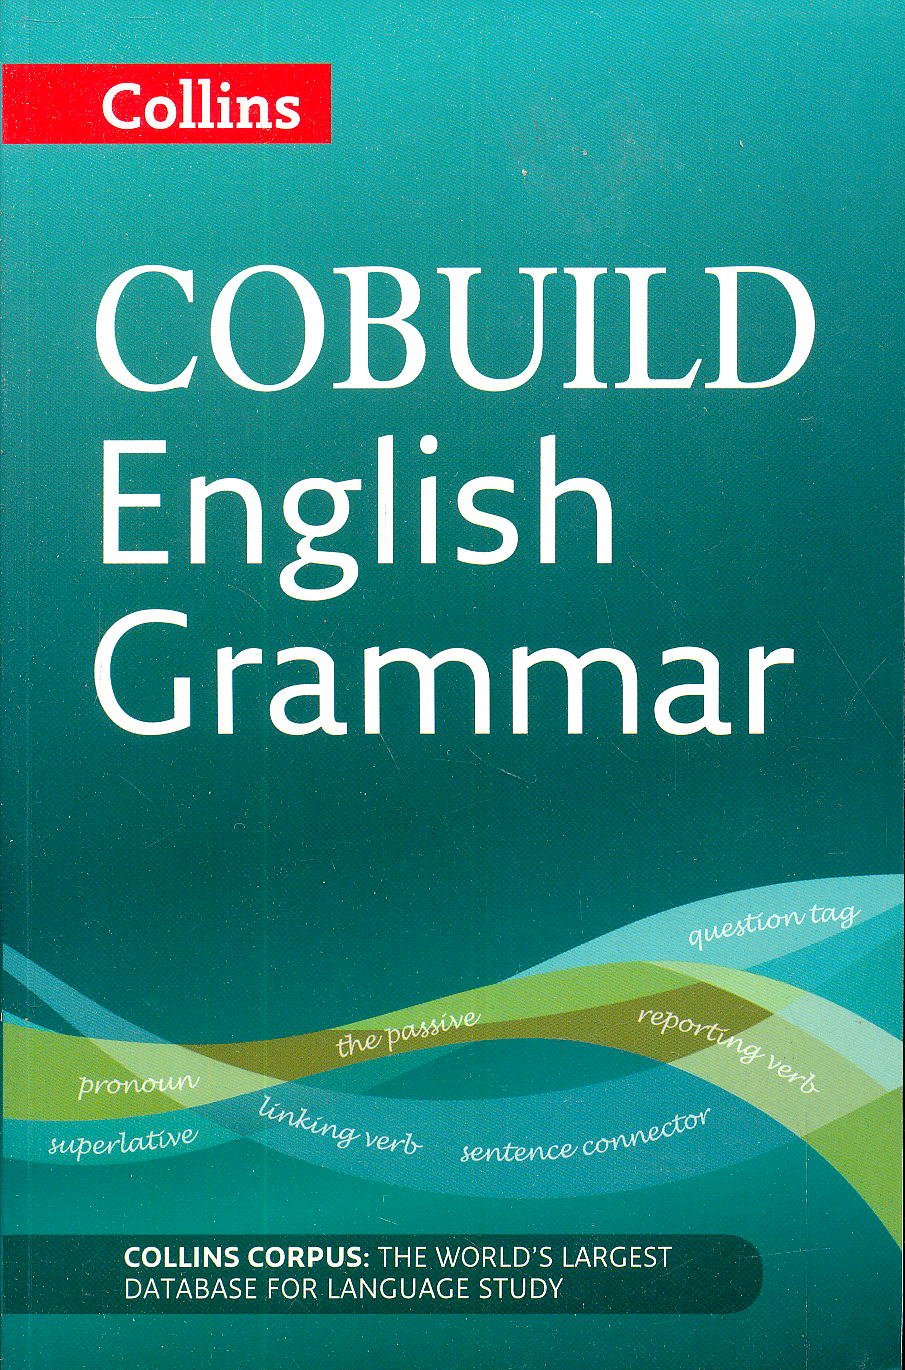 Collins Cobuild English Grammar柯林斯COBUILD英语语法词典 英文原版 pdf格式下载